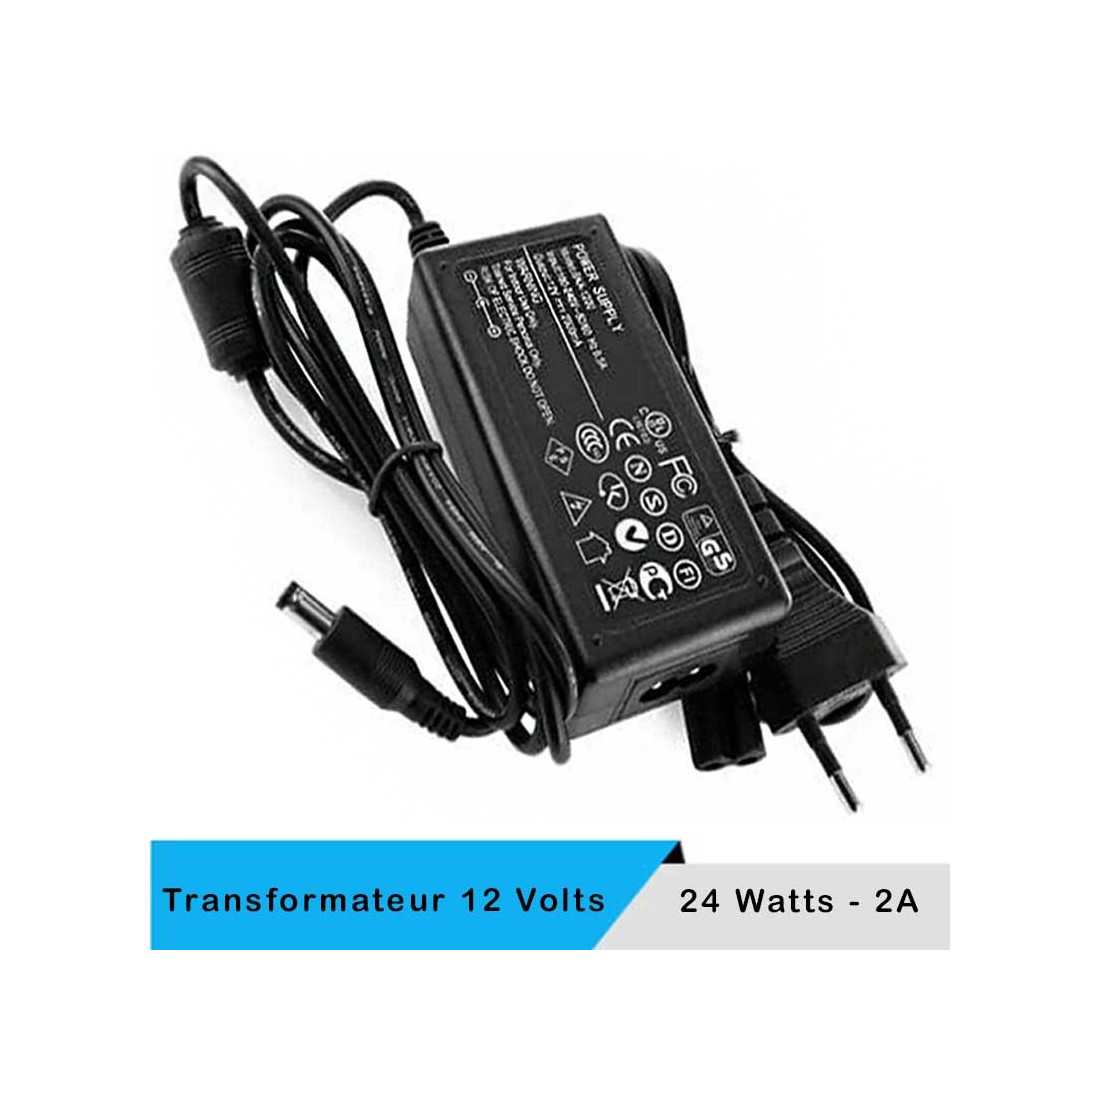 Transformateur adaptateur 12V 2A ultra slim avec voyant led